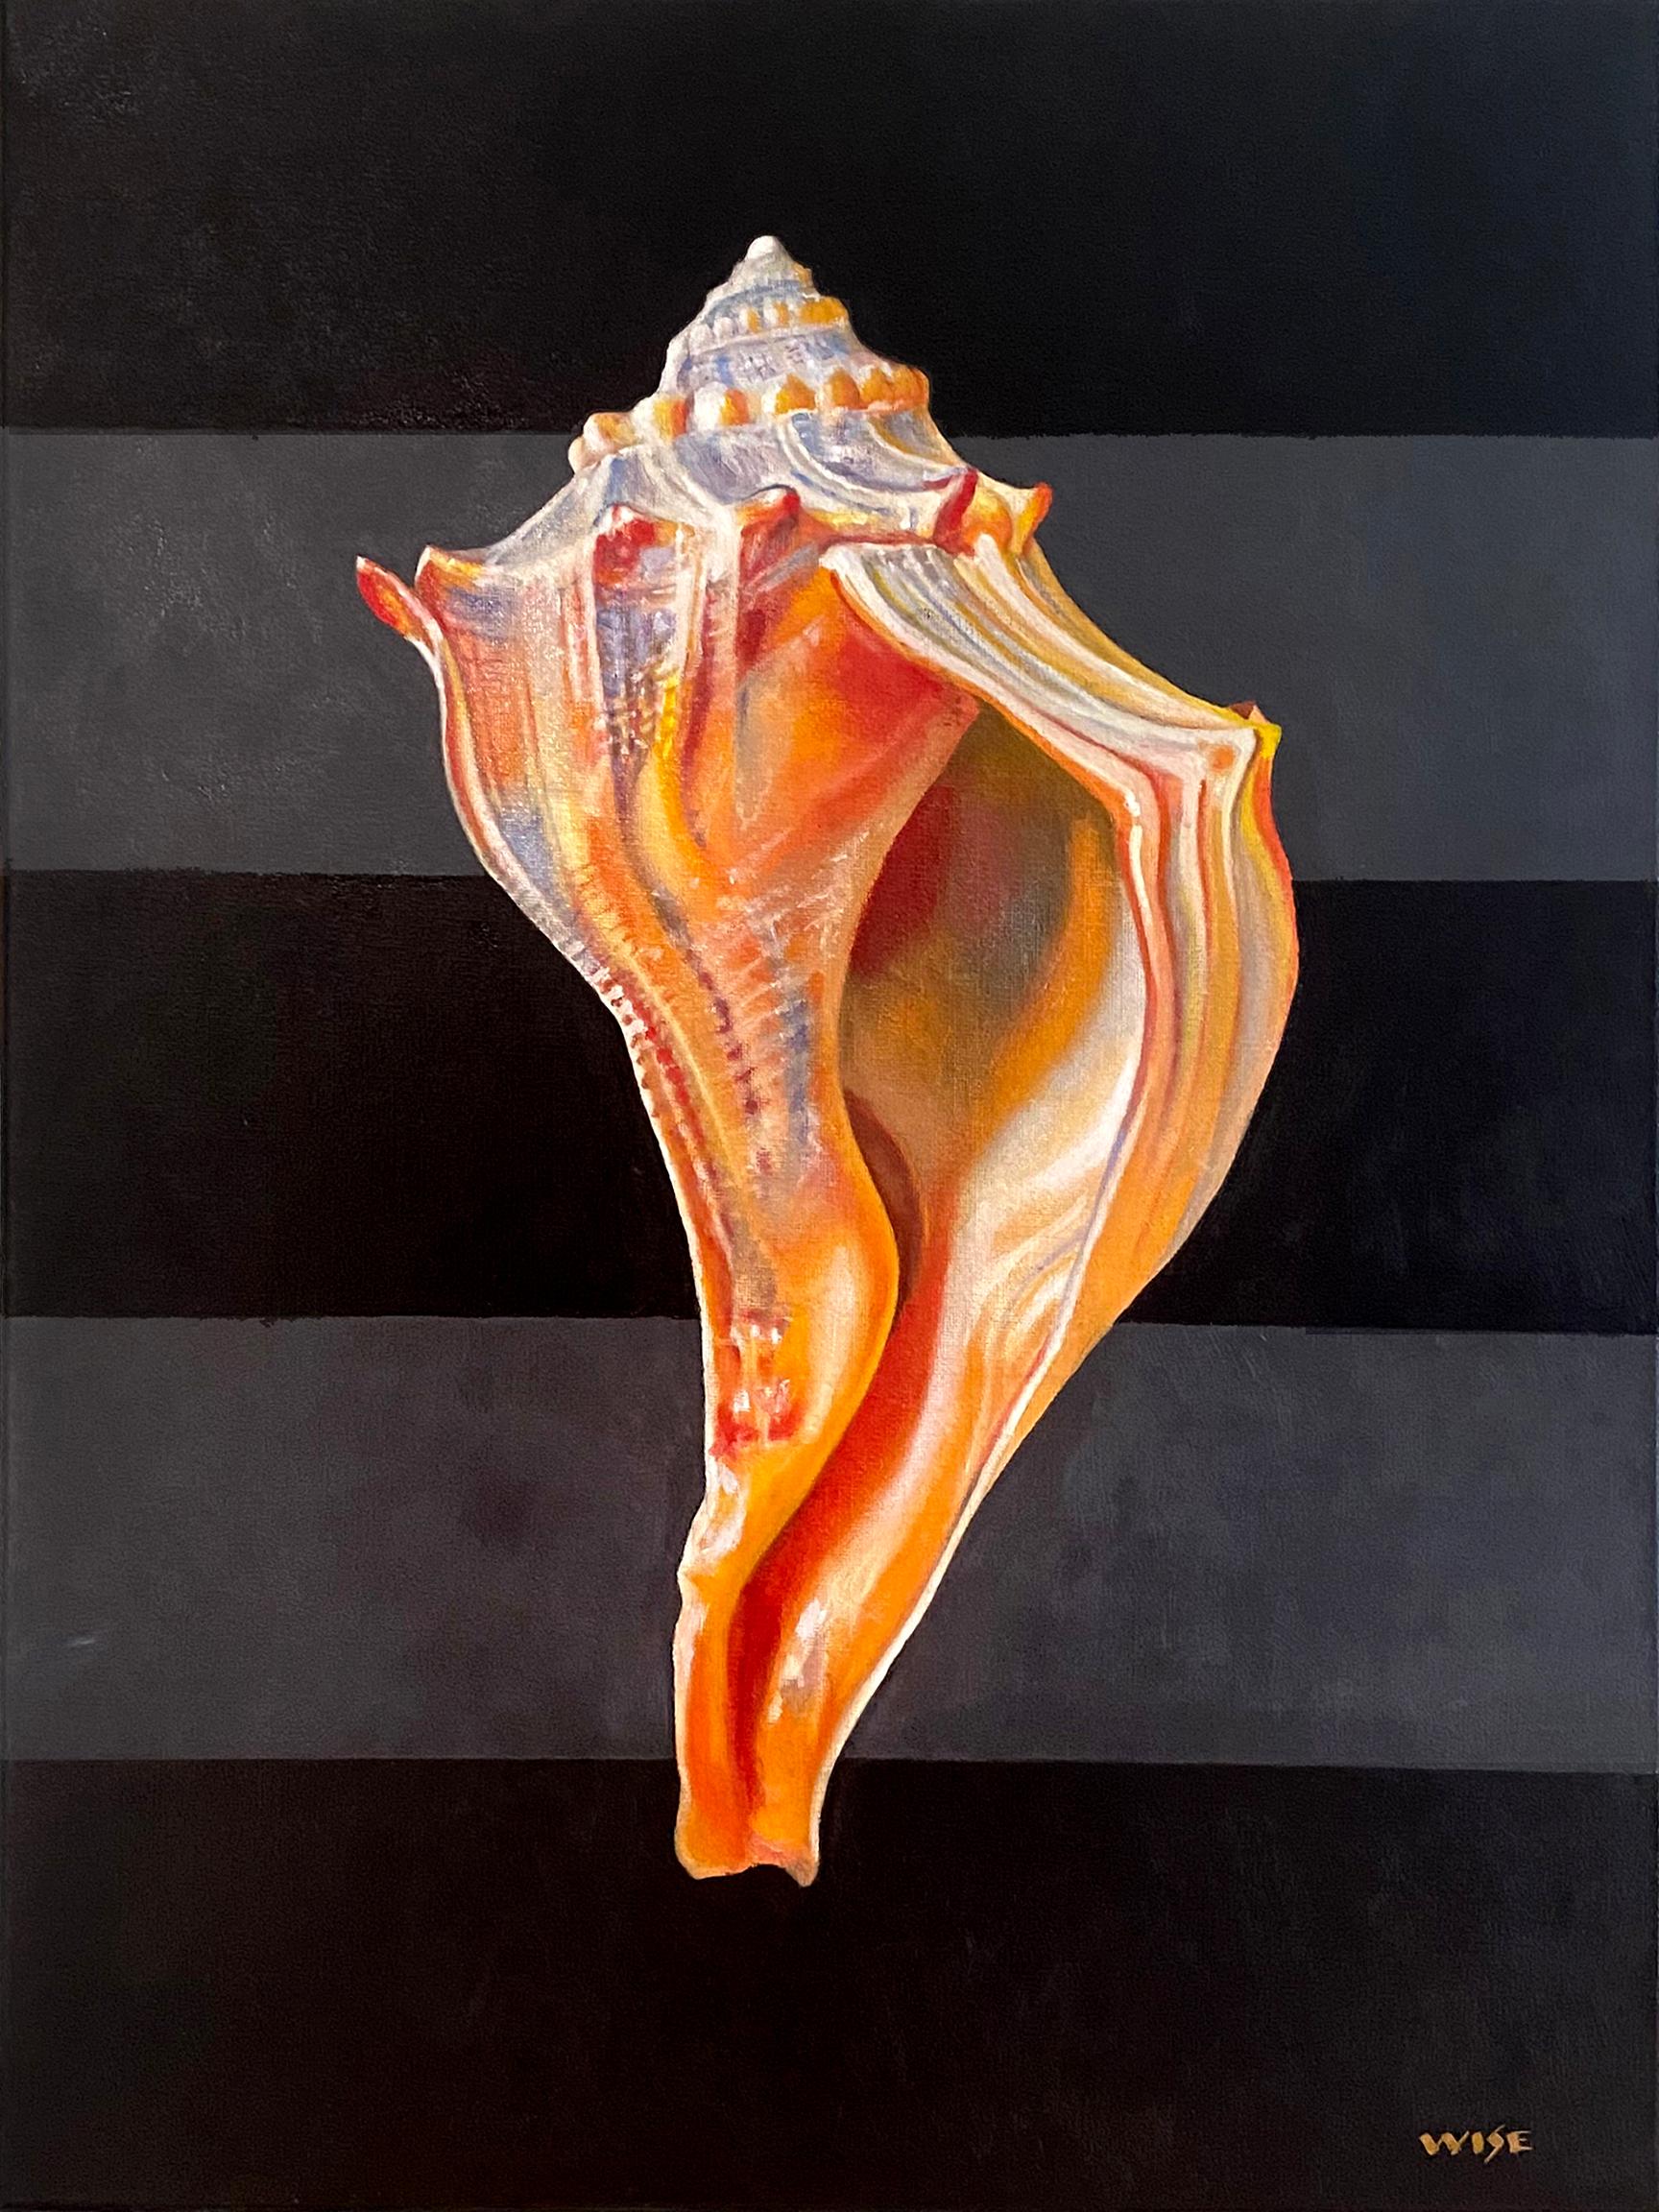 "Welk" - shell painting, still life, realism - Georgia O'Keeffe